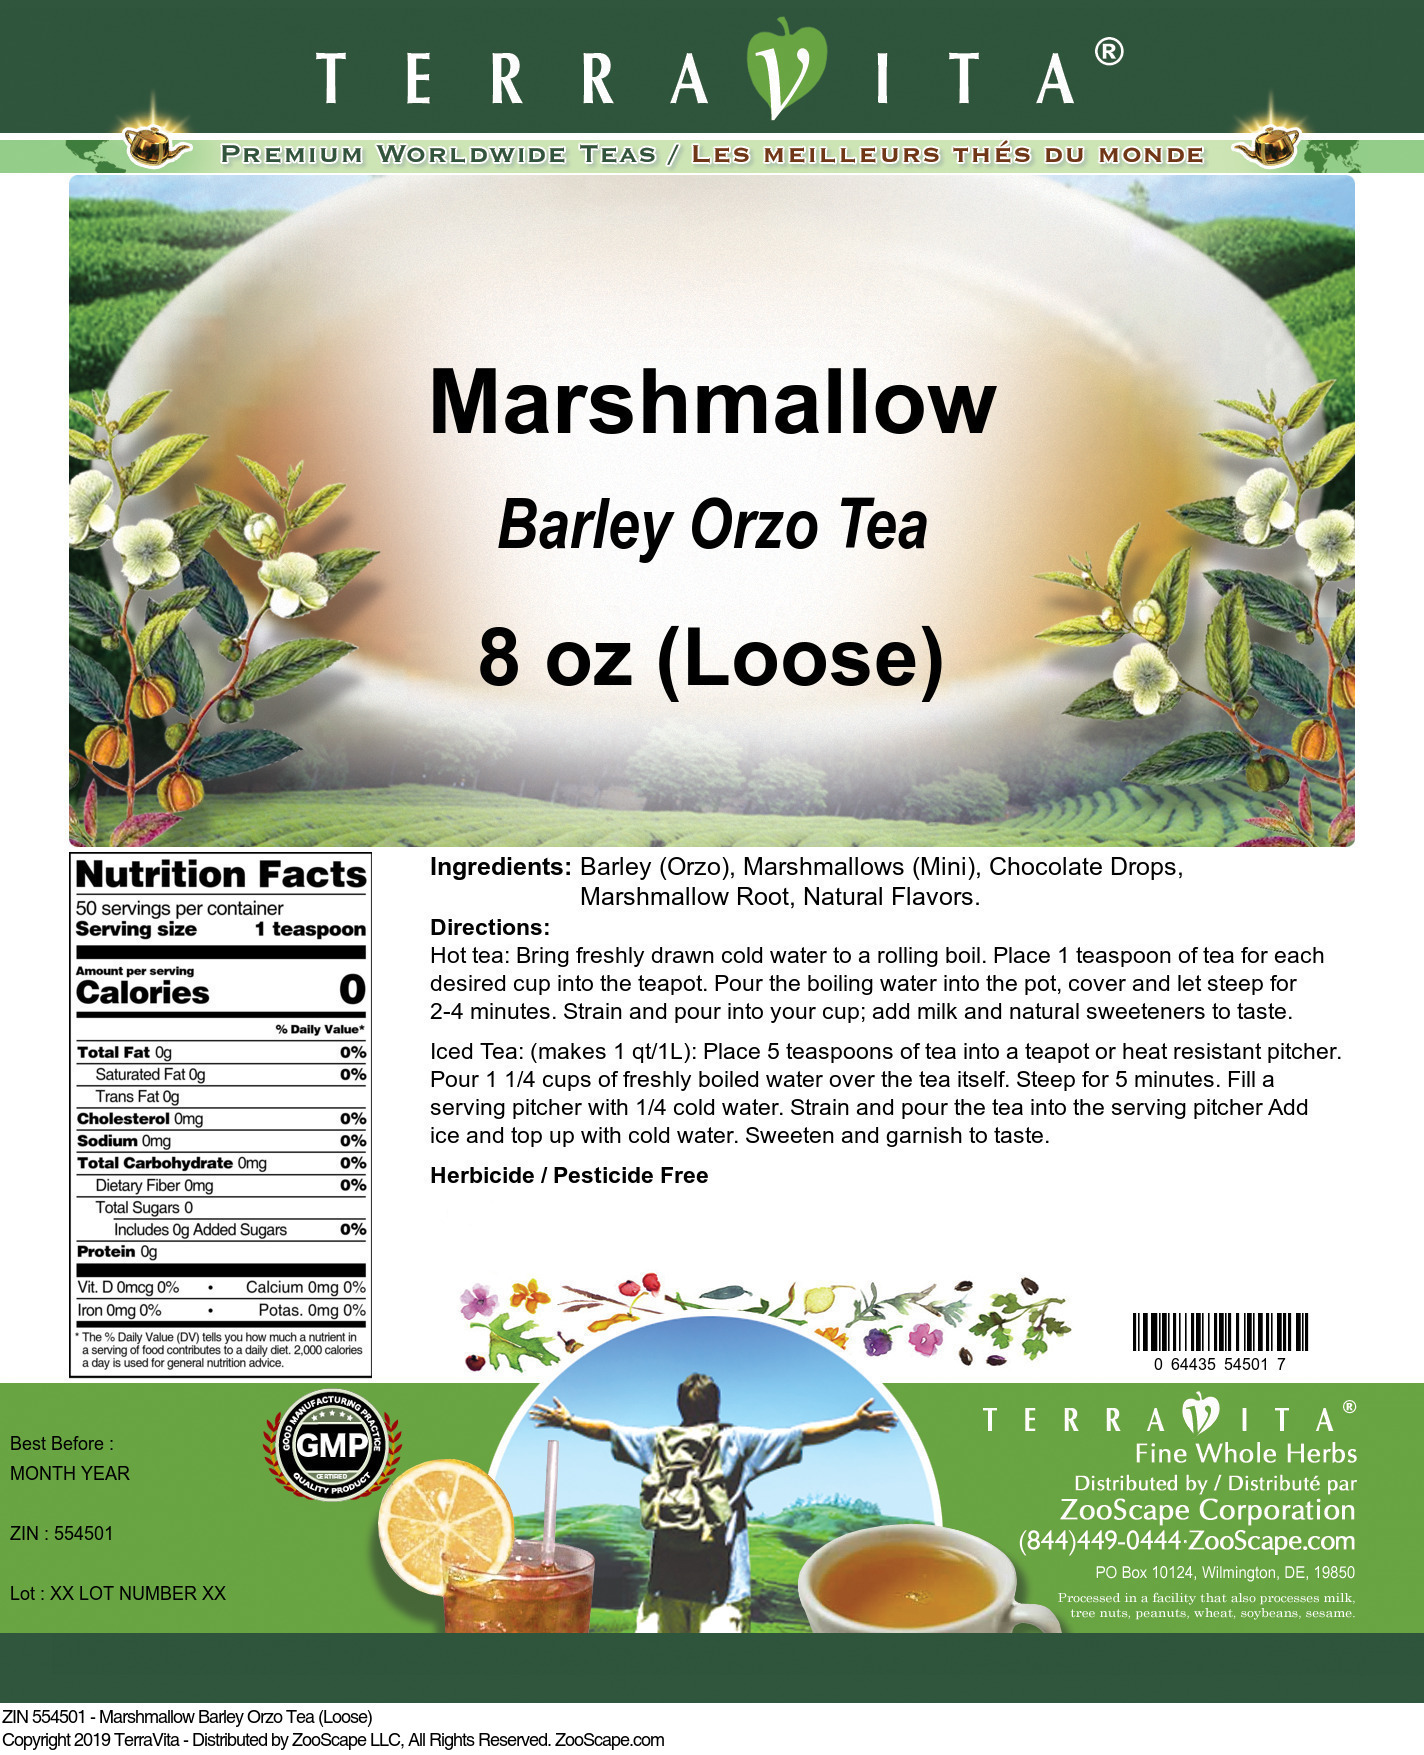 Marshmallow Barley Orzo Tea (Loose) - Label